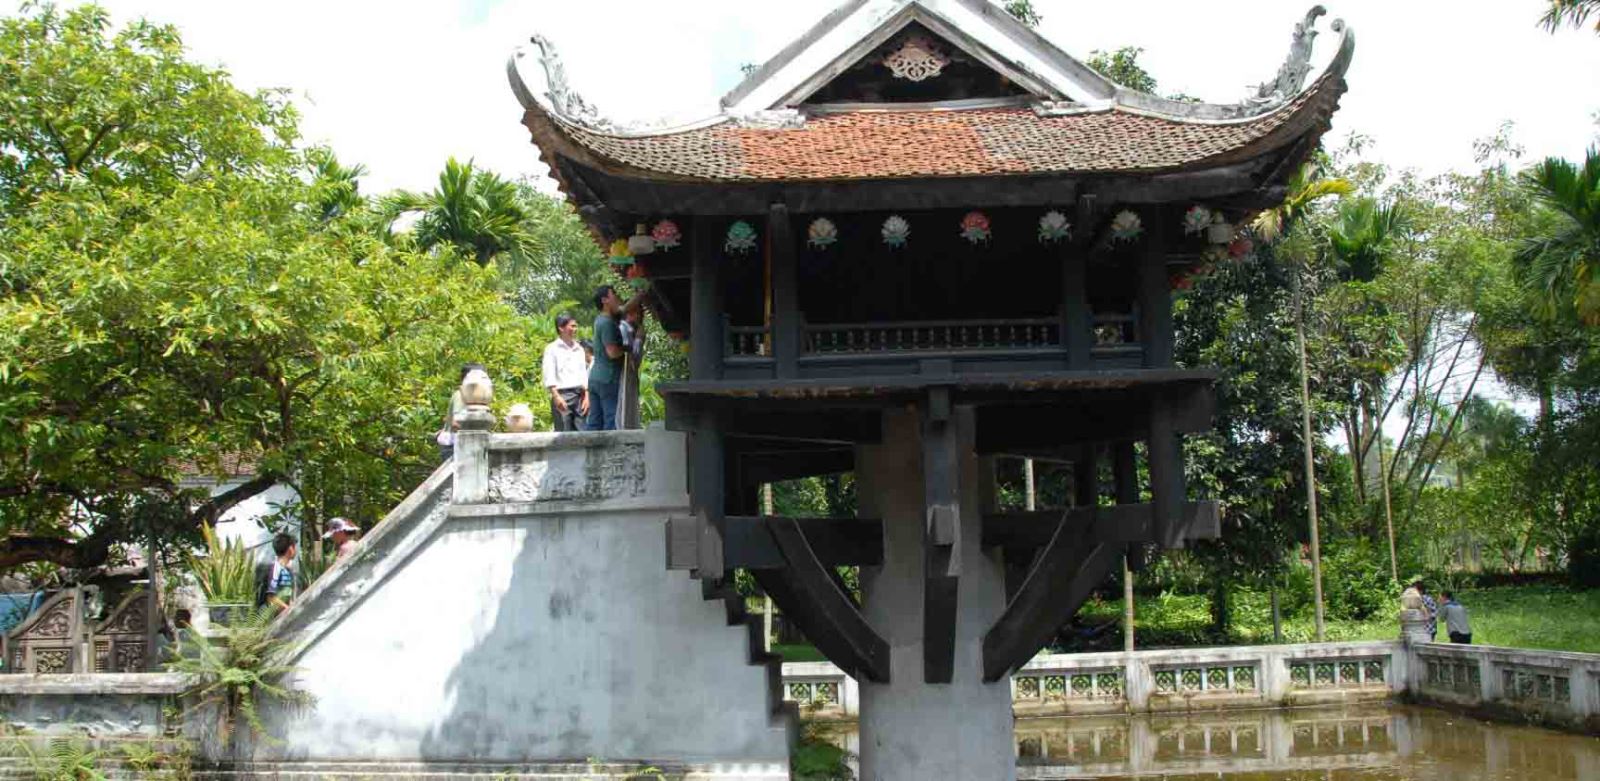 1.9. The One Pillar Pagoda